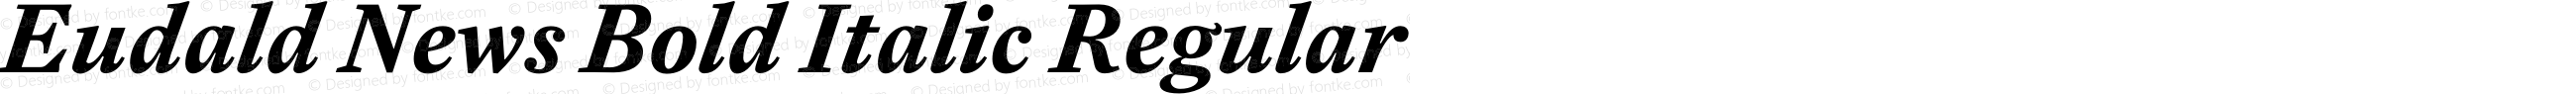 Eudald News Bold Italic Regular